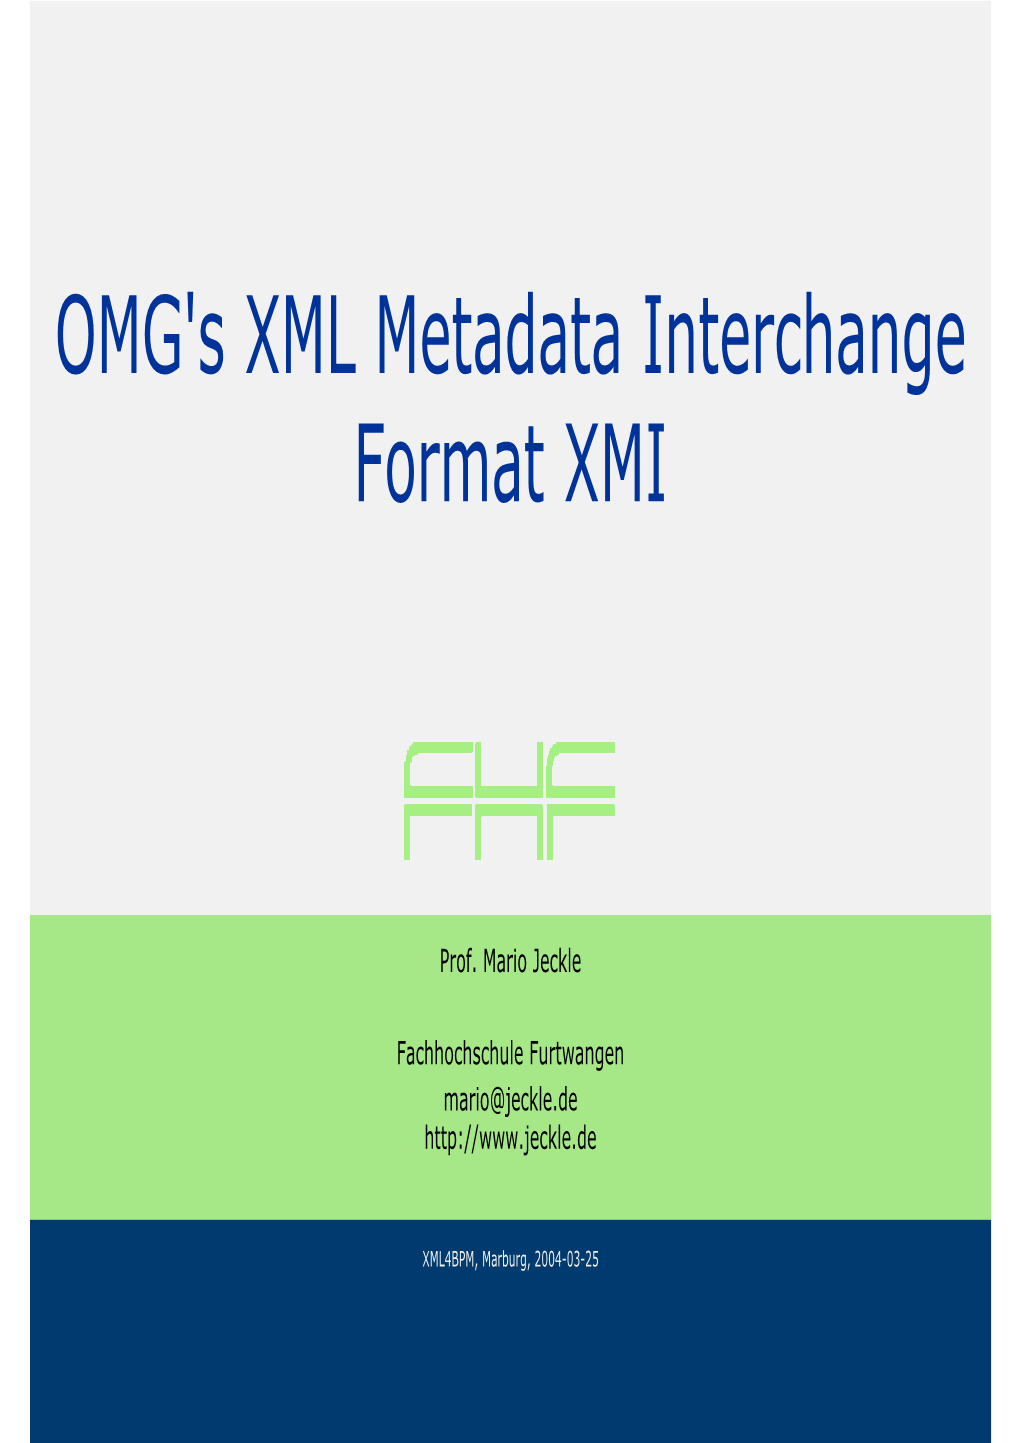 OMG's XML Metadata Interchange Format XMI